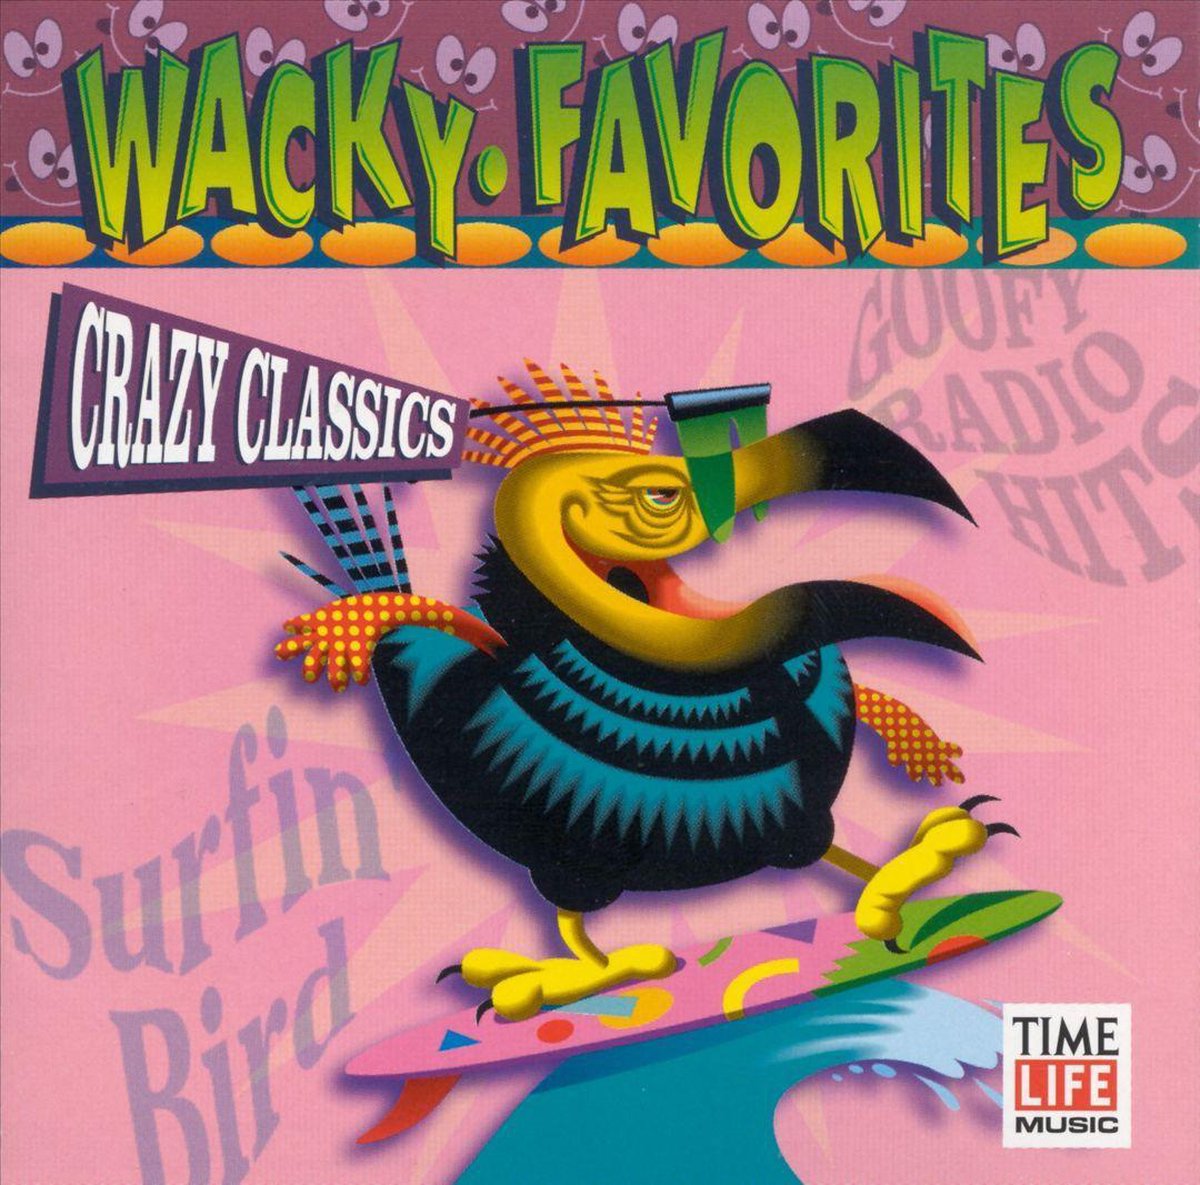 Wacky Favorites: Crazy Classics - various artists